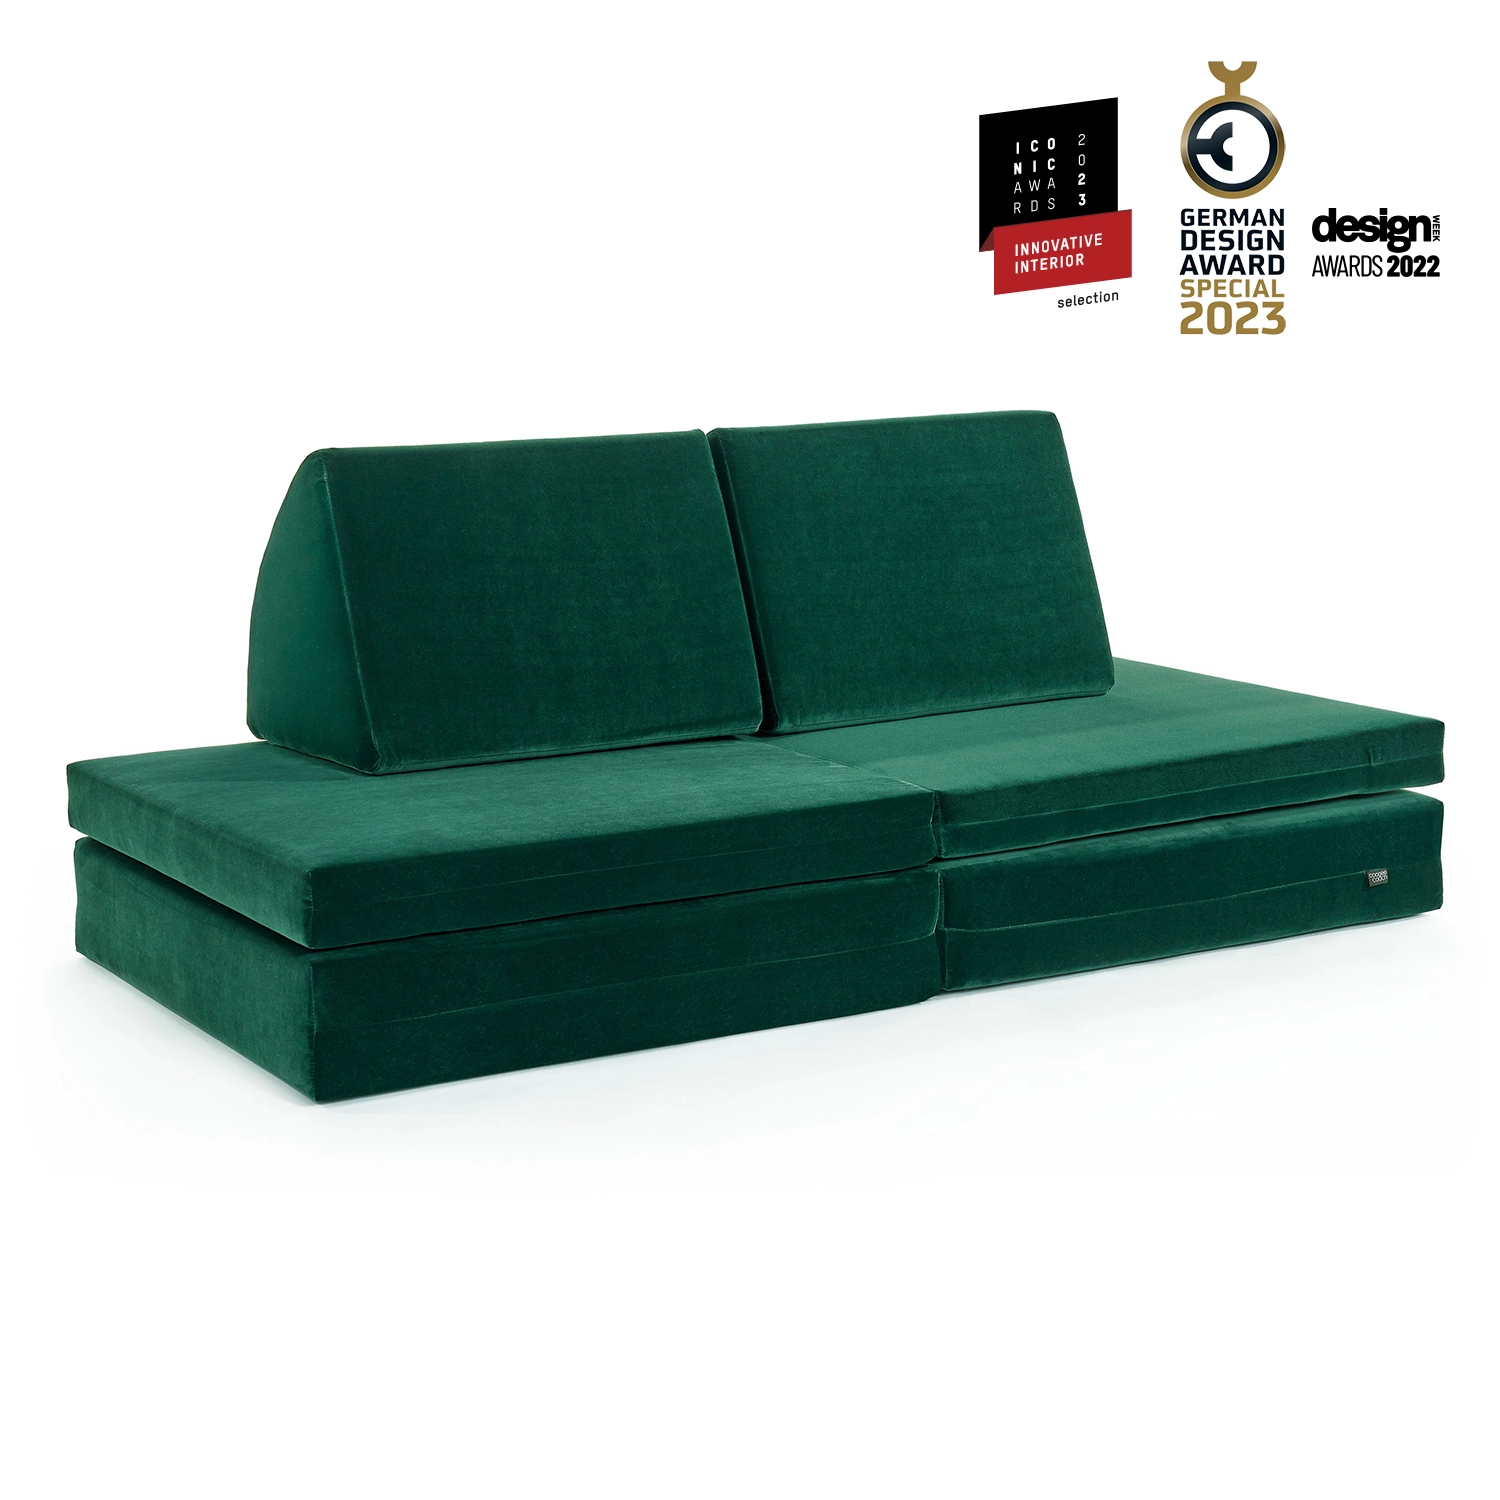 coogeecouch | 3 Awards | German Design Award 2023 | Kindersofa | Serie: wildwildwoods | Farbe: pine-green gruen | Ansicht: Front schräg | made in Germany